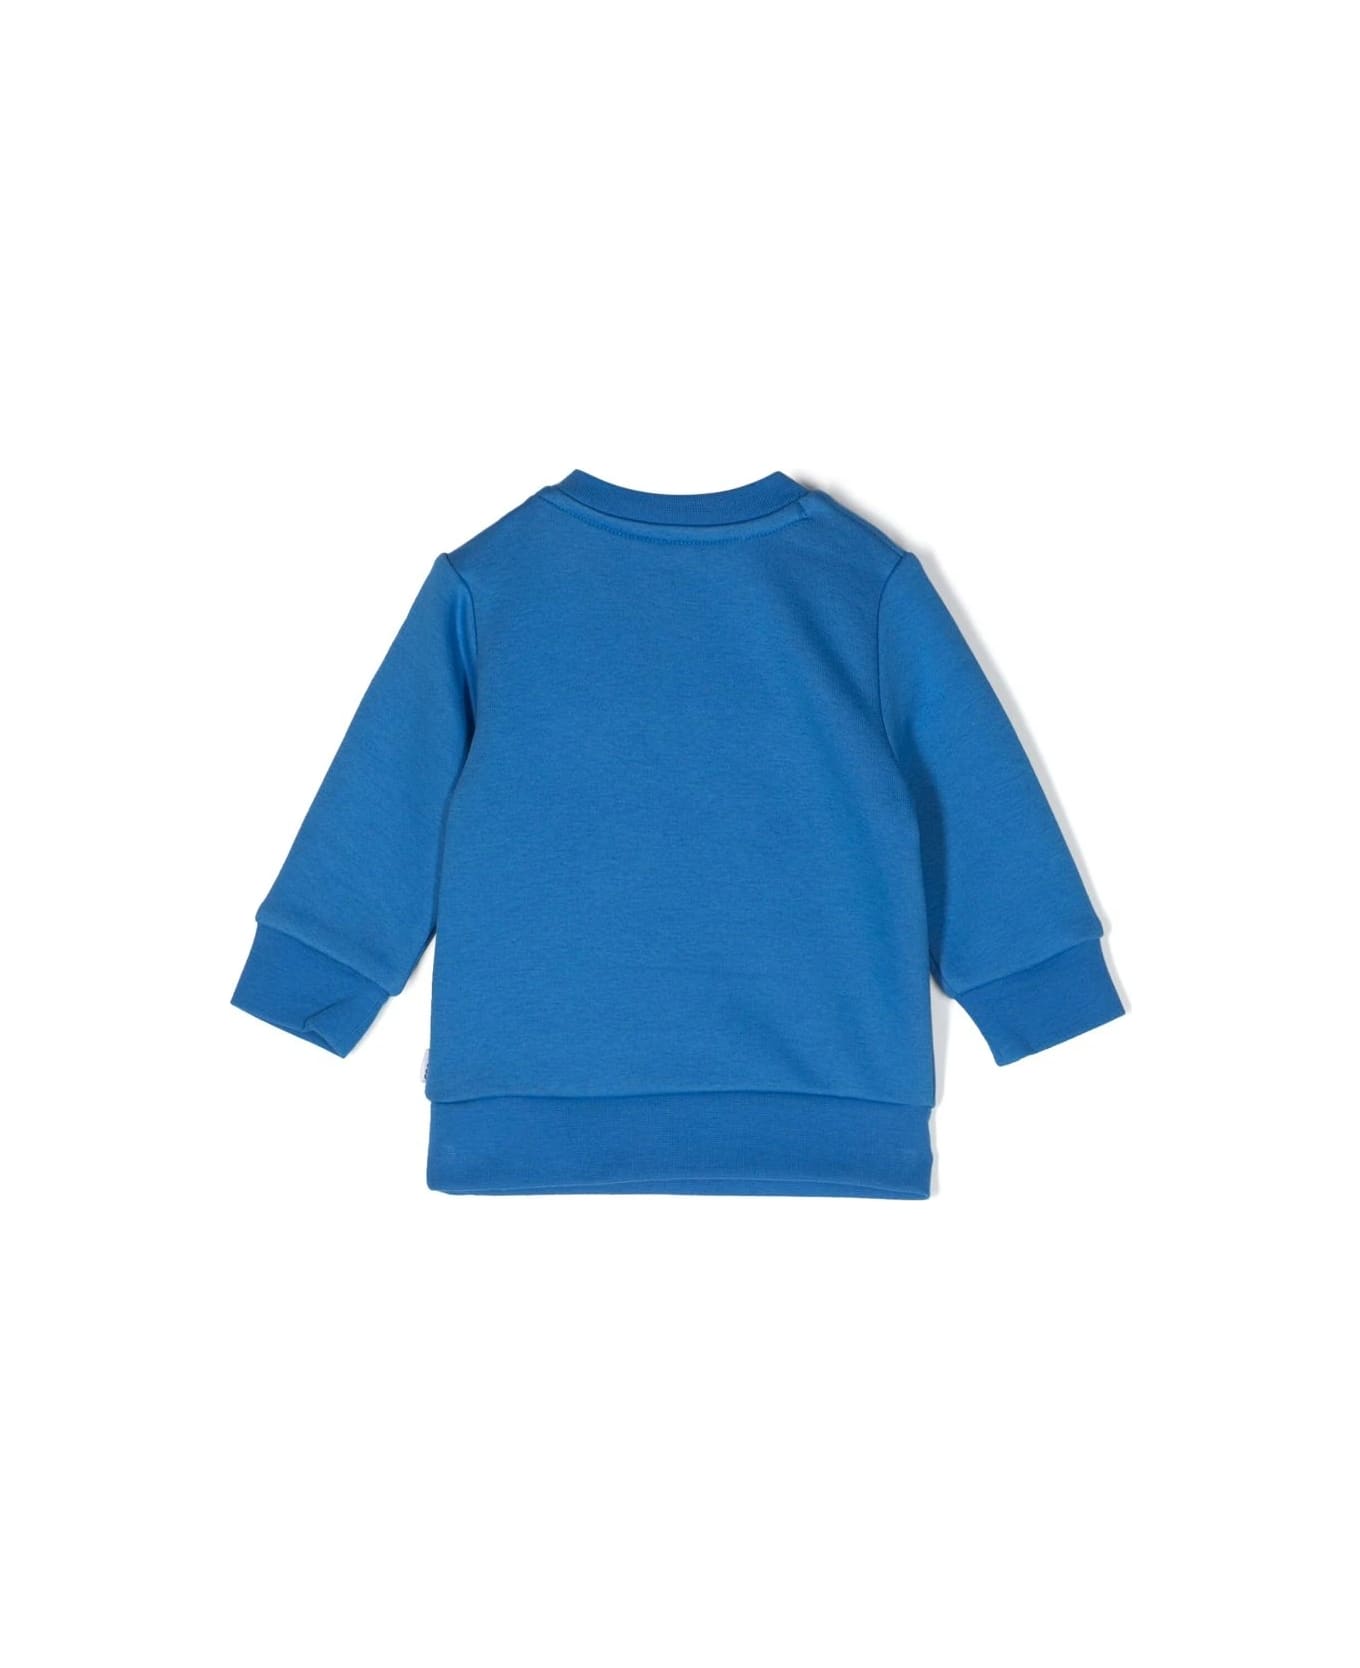 Hugo Boss Sweatshirt With Print - Blue ニットウェア＆スウェットシャツ